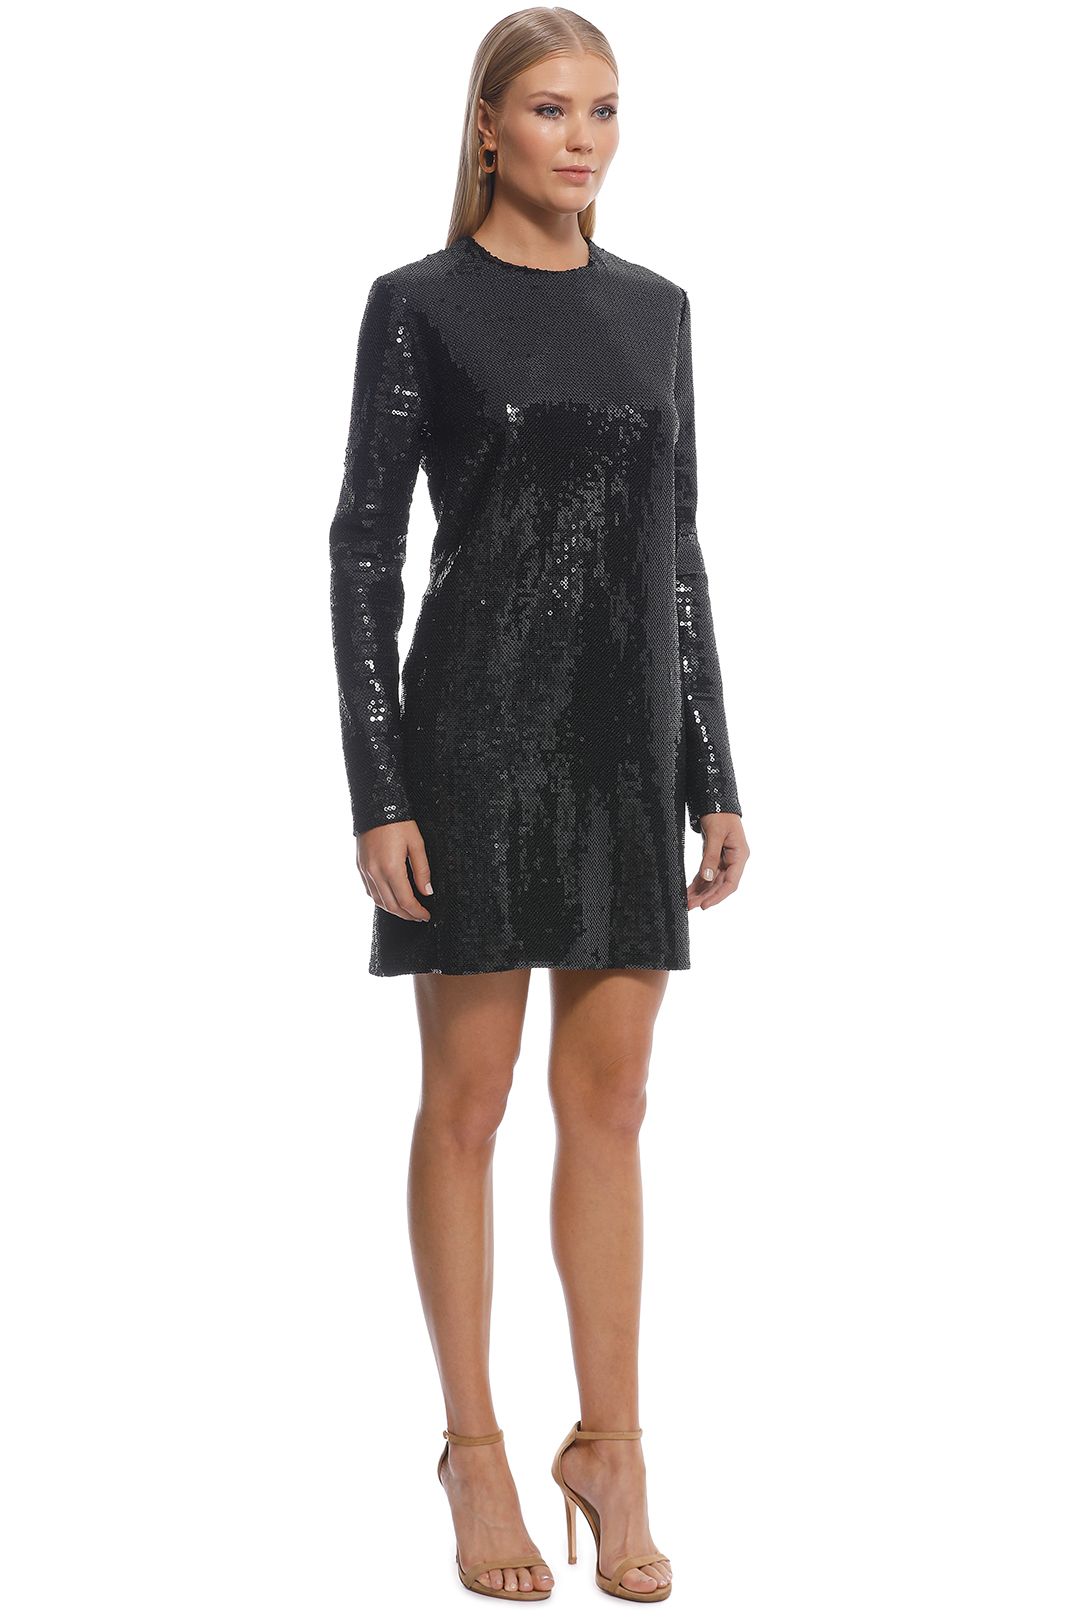 Ellery - Sequin LS Mini Dress - Black - Side